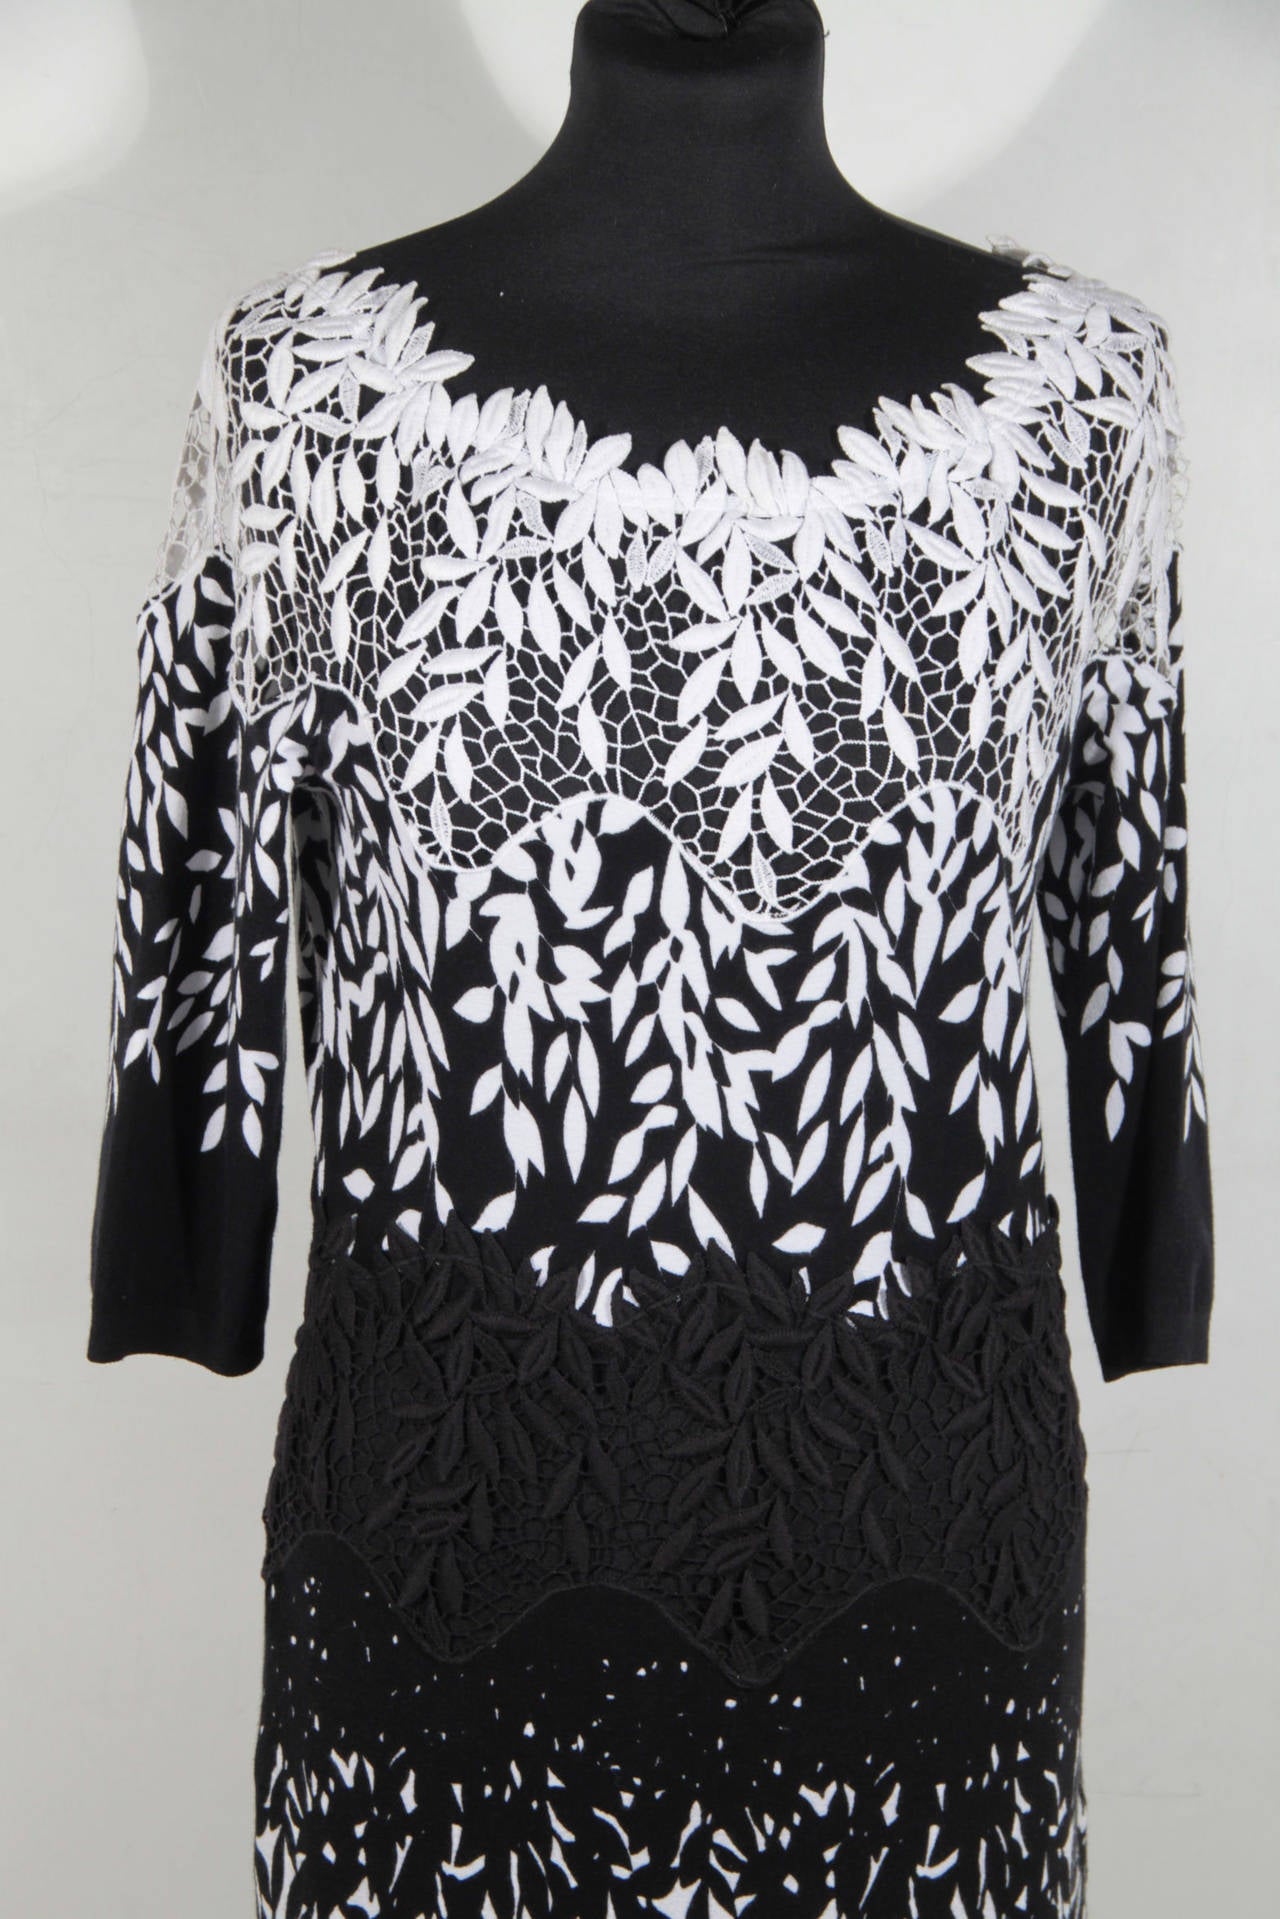 BLUMARINE Black & White SHEATH DRESS 3/4 Sleeves w/ LACE Inserts SIZE 44 IT 1